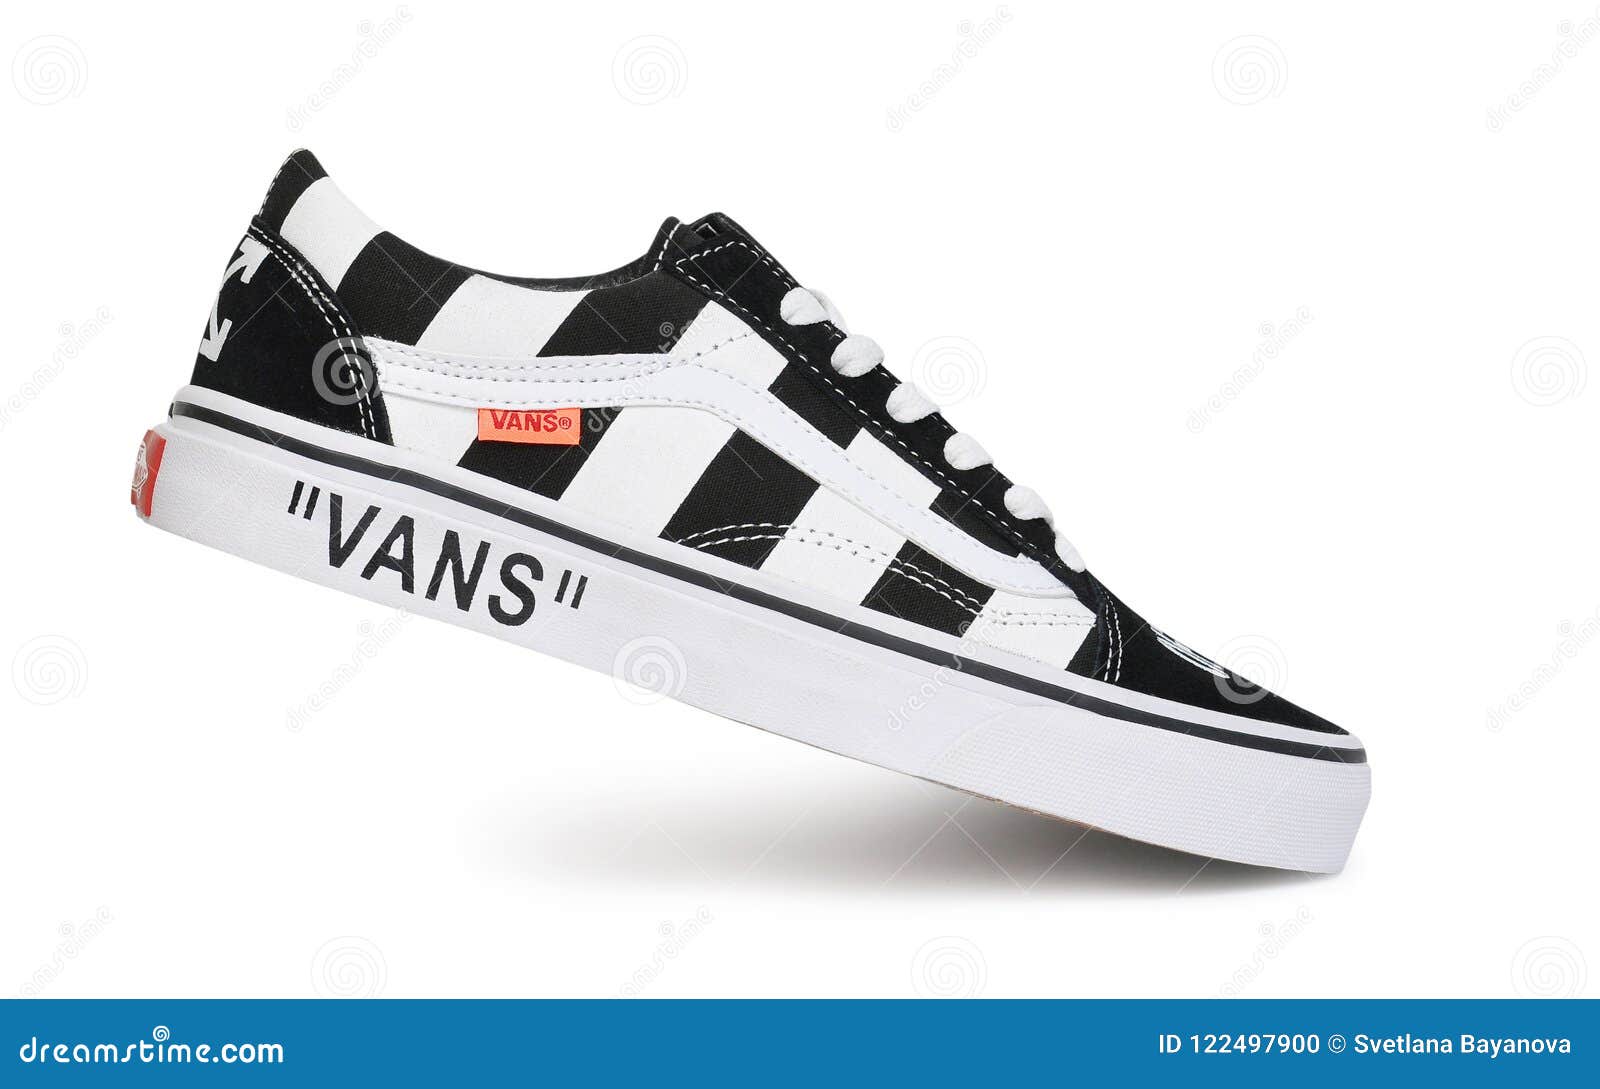 vans shoes stock